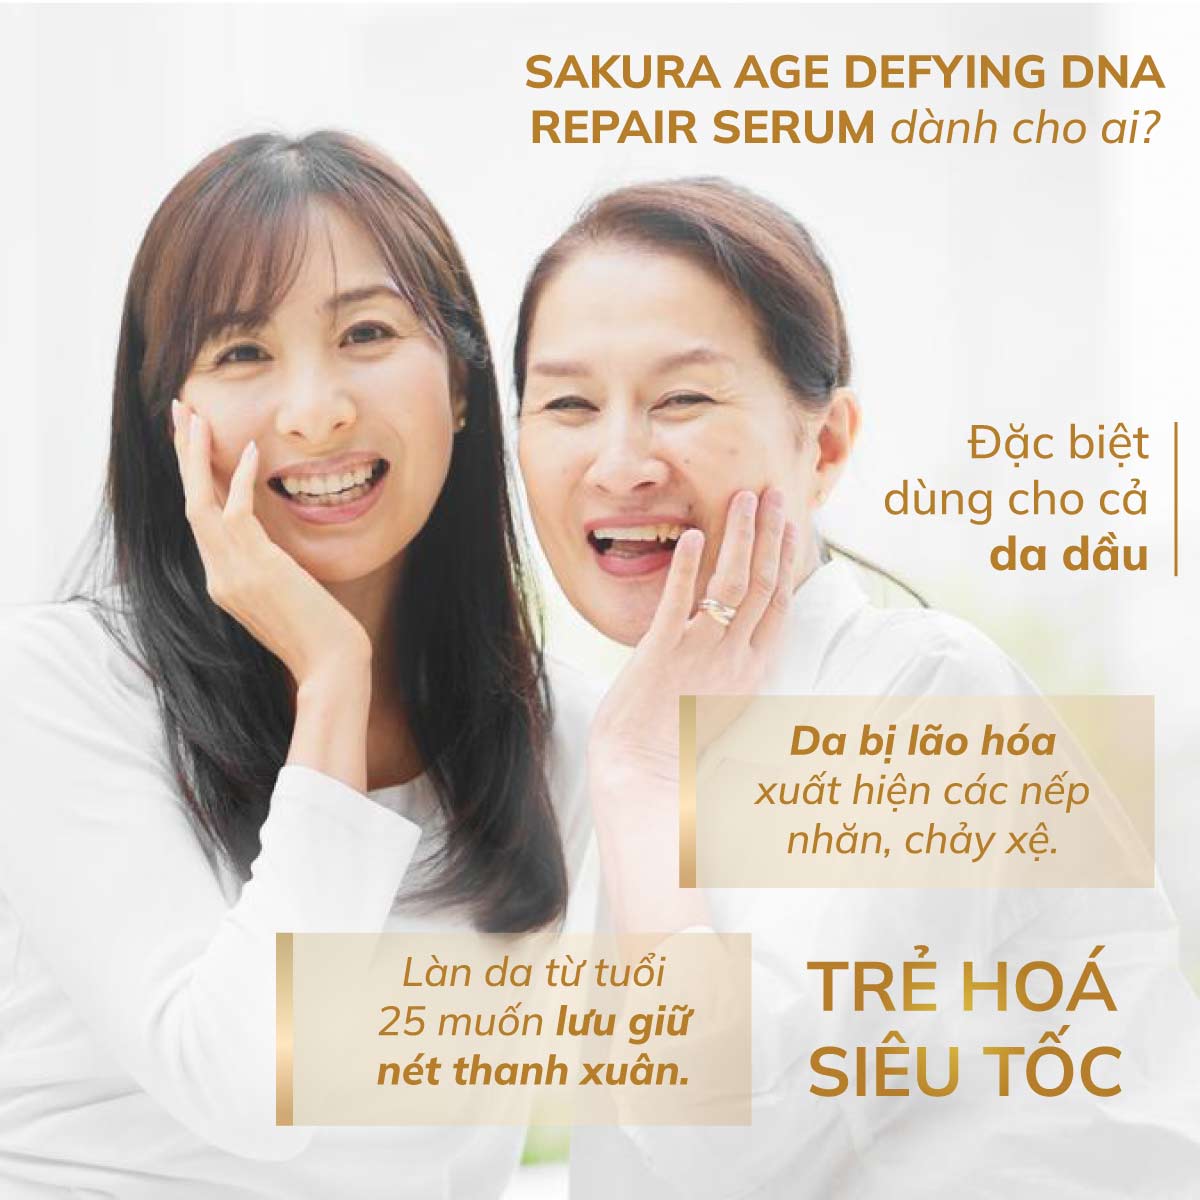 Serum dưỡng da, chống lão hóa SAKURA Age Defying DNA Repair Serum 40 viên